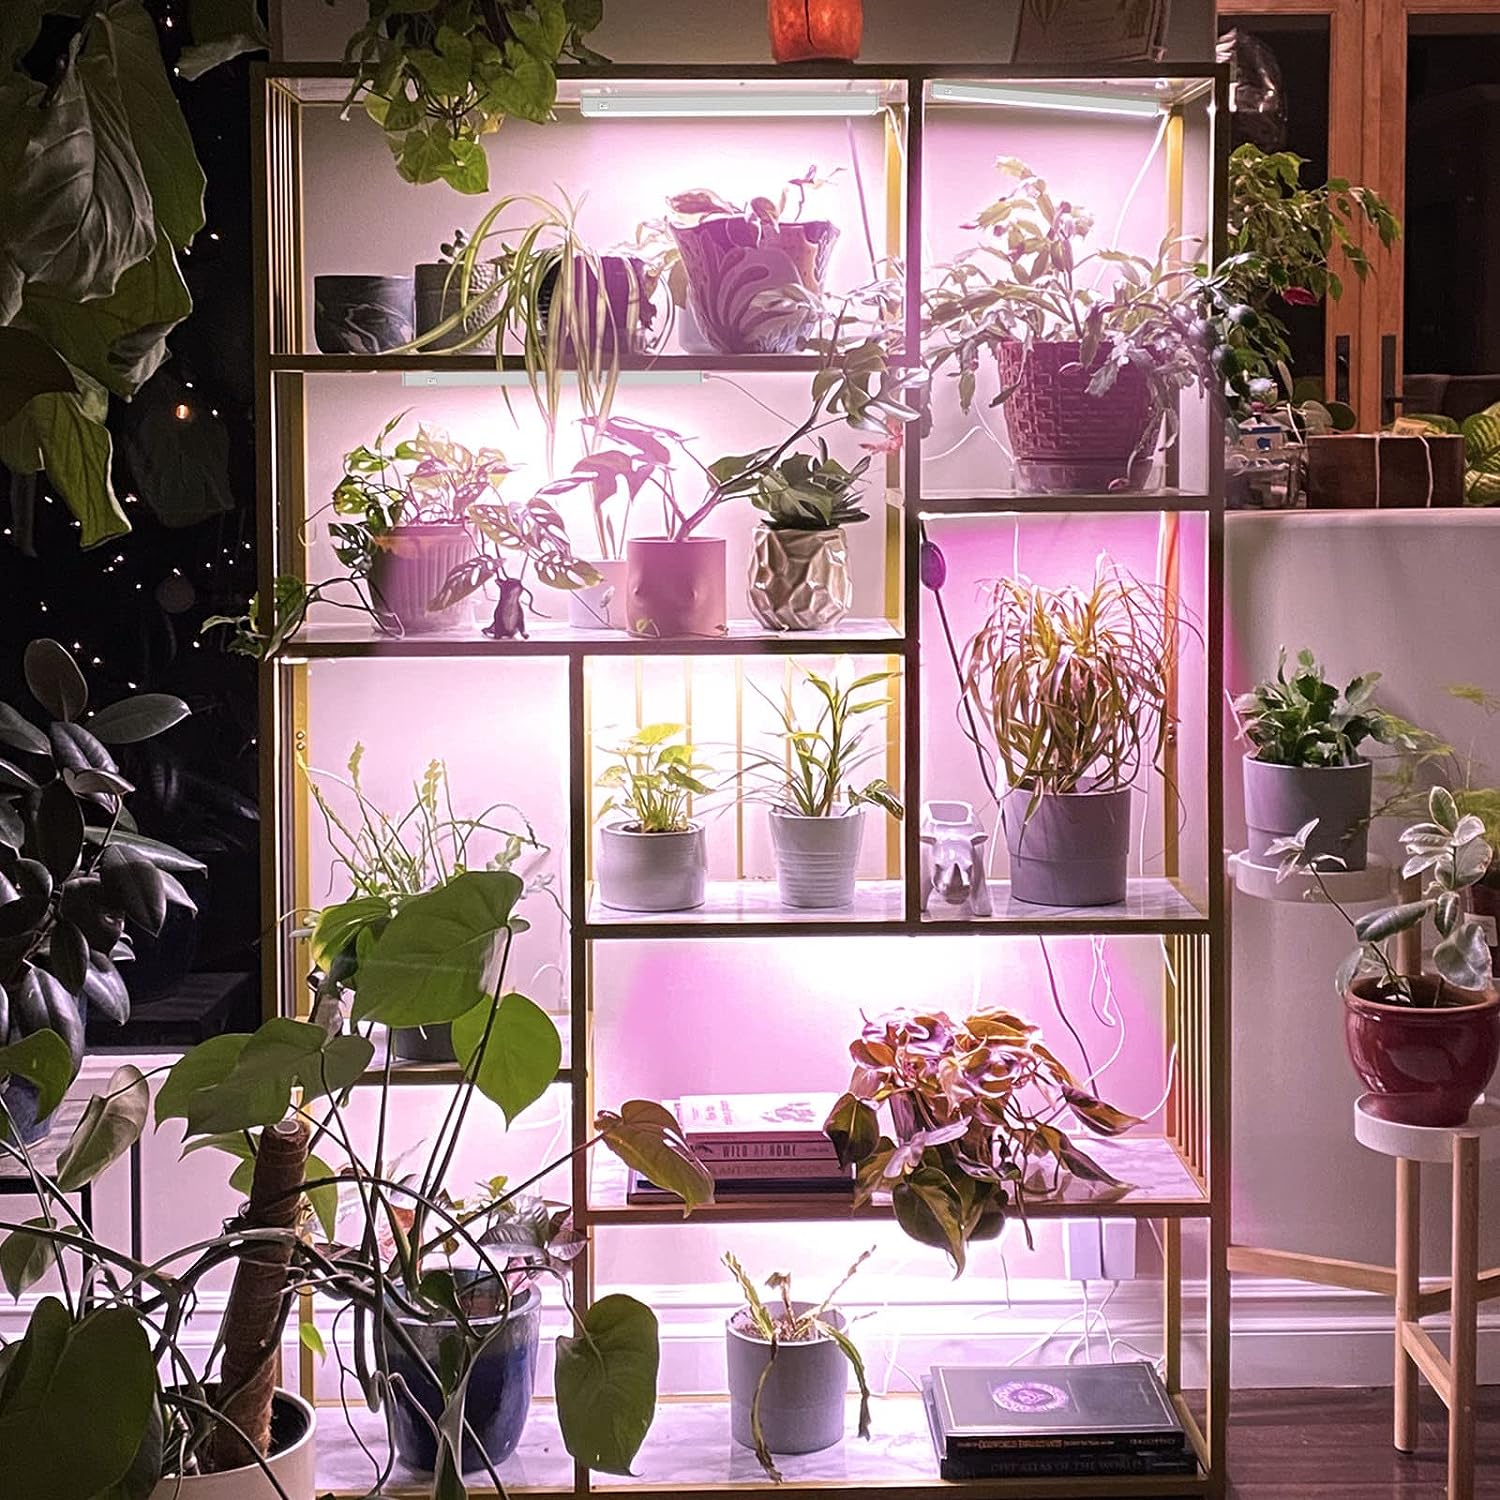 Barrina Grow Lights for Indoor Plants, Full Spectrum Sunlight, 1ft Plant Light for Indoor Growing, LED Grow Light Bulbs, T5 Grow Light Strip, Plug and Play, Pinkish White, 8-Pack